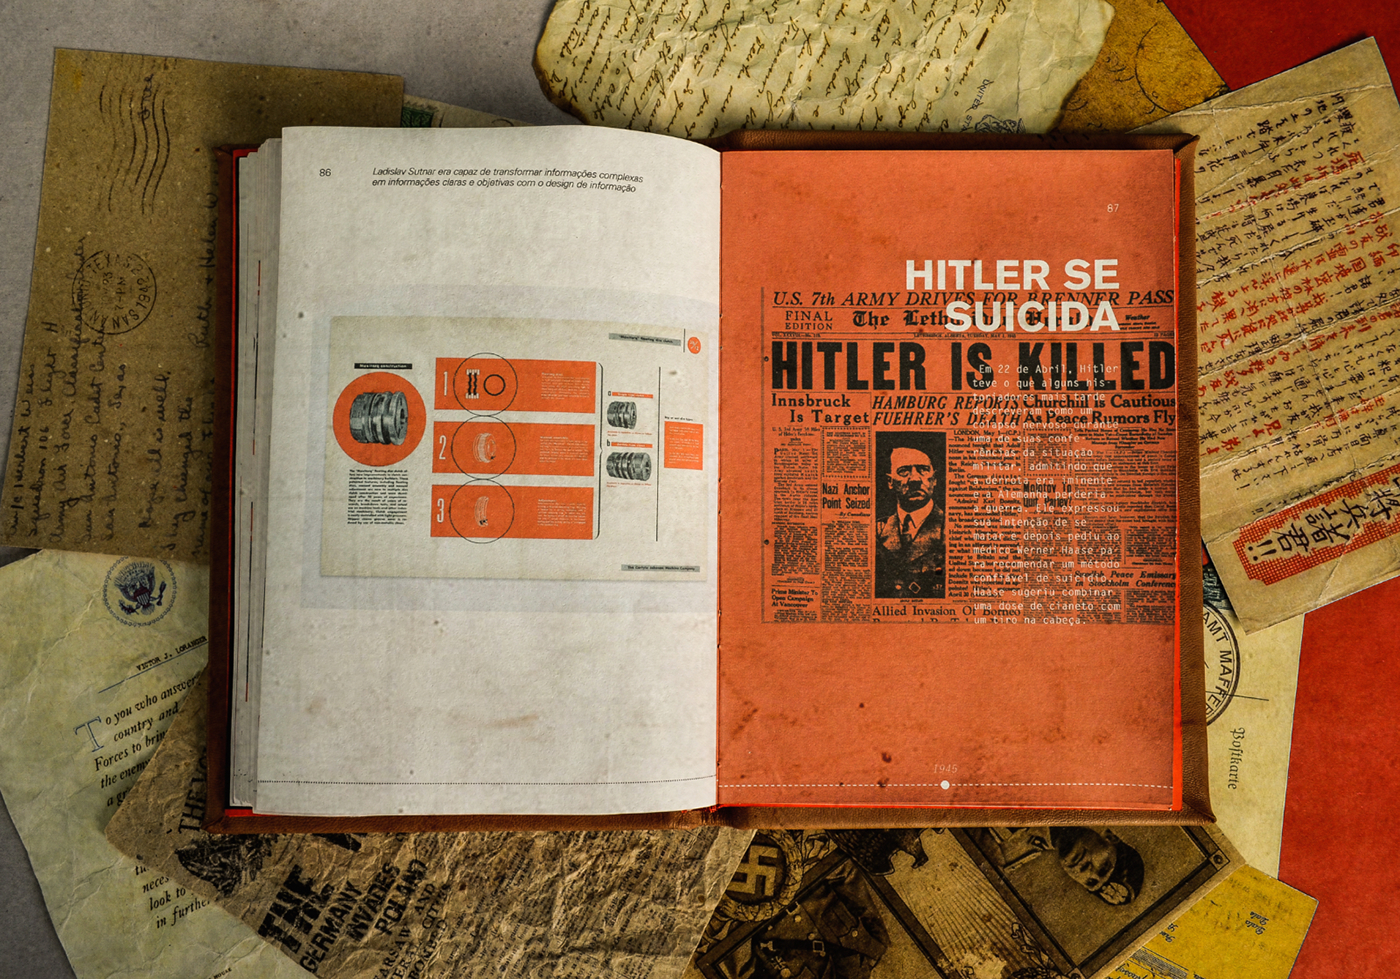 ww2 world war UEMG design history neue typography bauhaus usa history Poster Design Hitler holocaust united states Newsweek advertising arts hiroshima blood